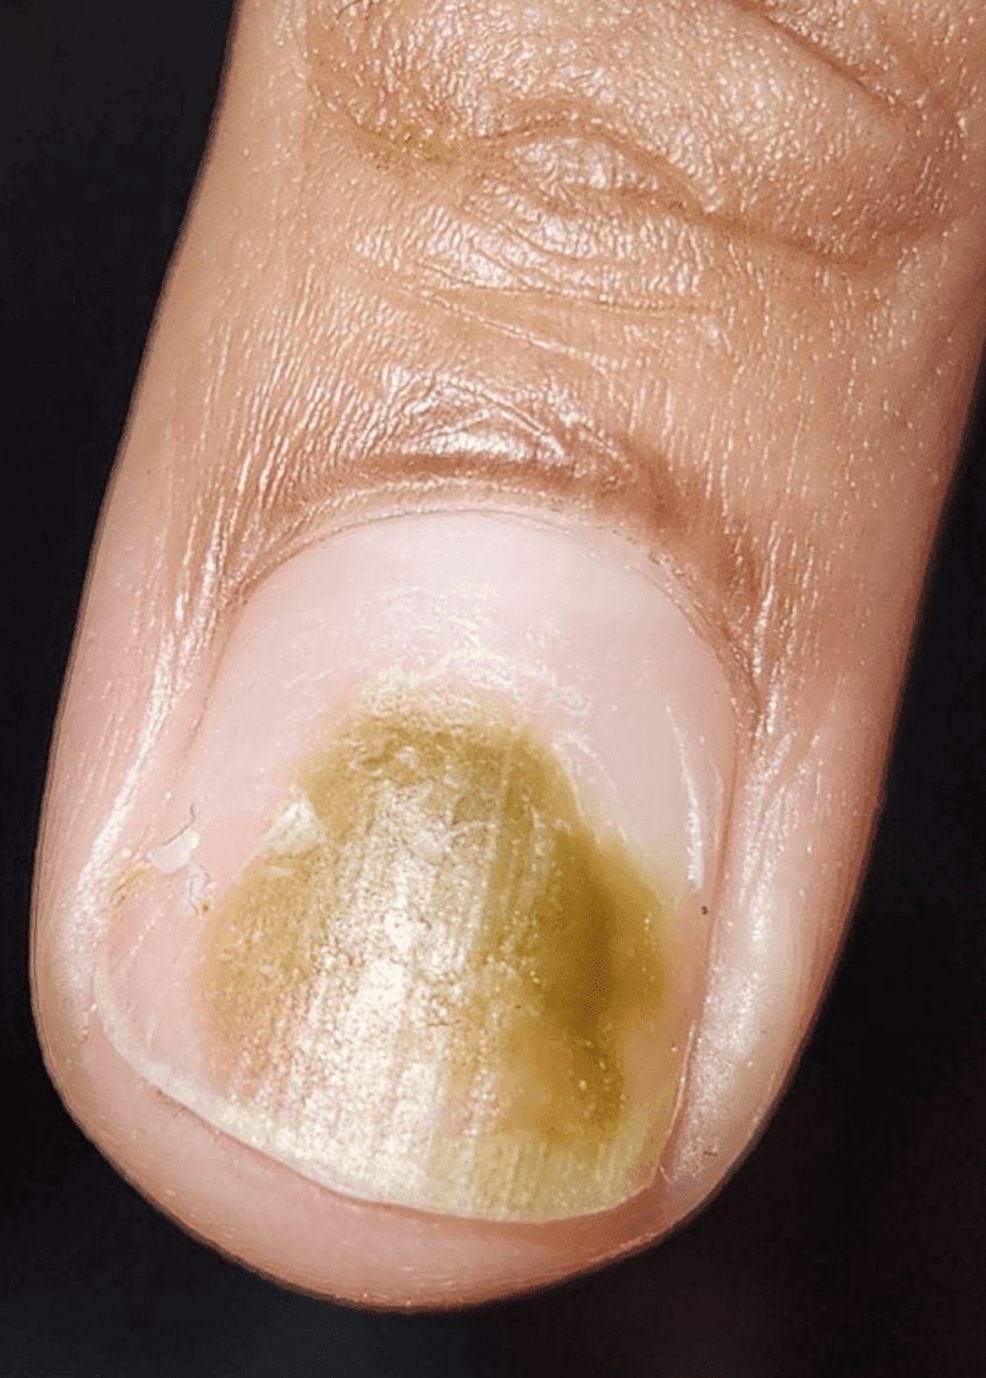 Inherited nail diseases - Dermatologie - Universimed - Medizin im Fokus